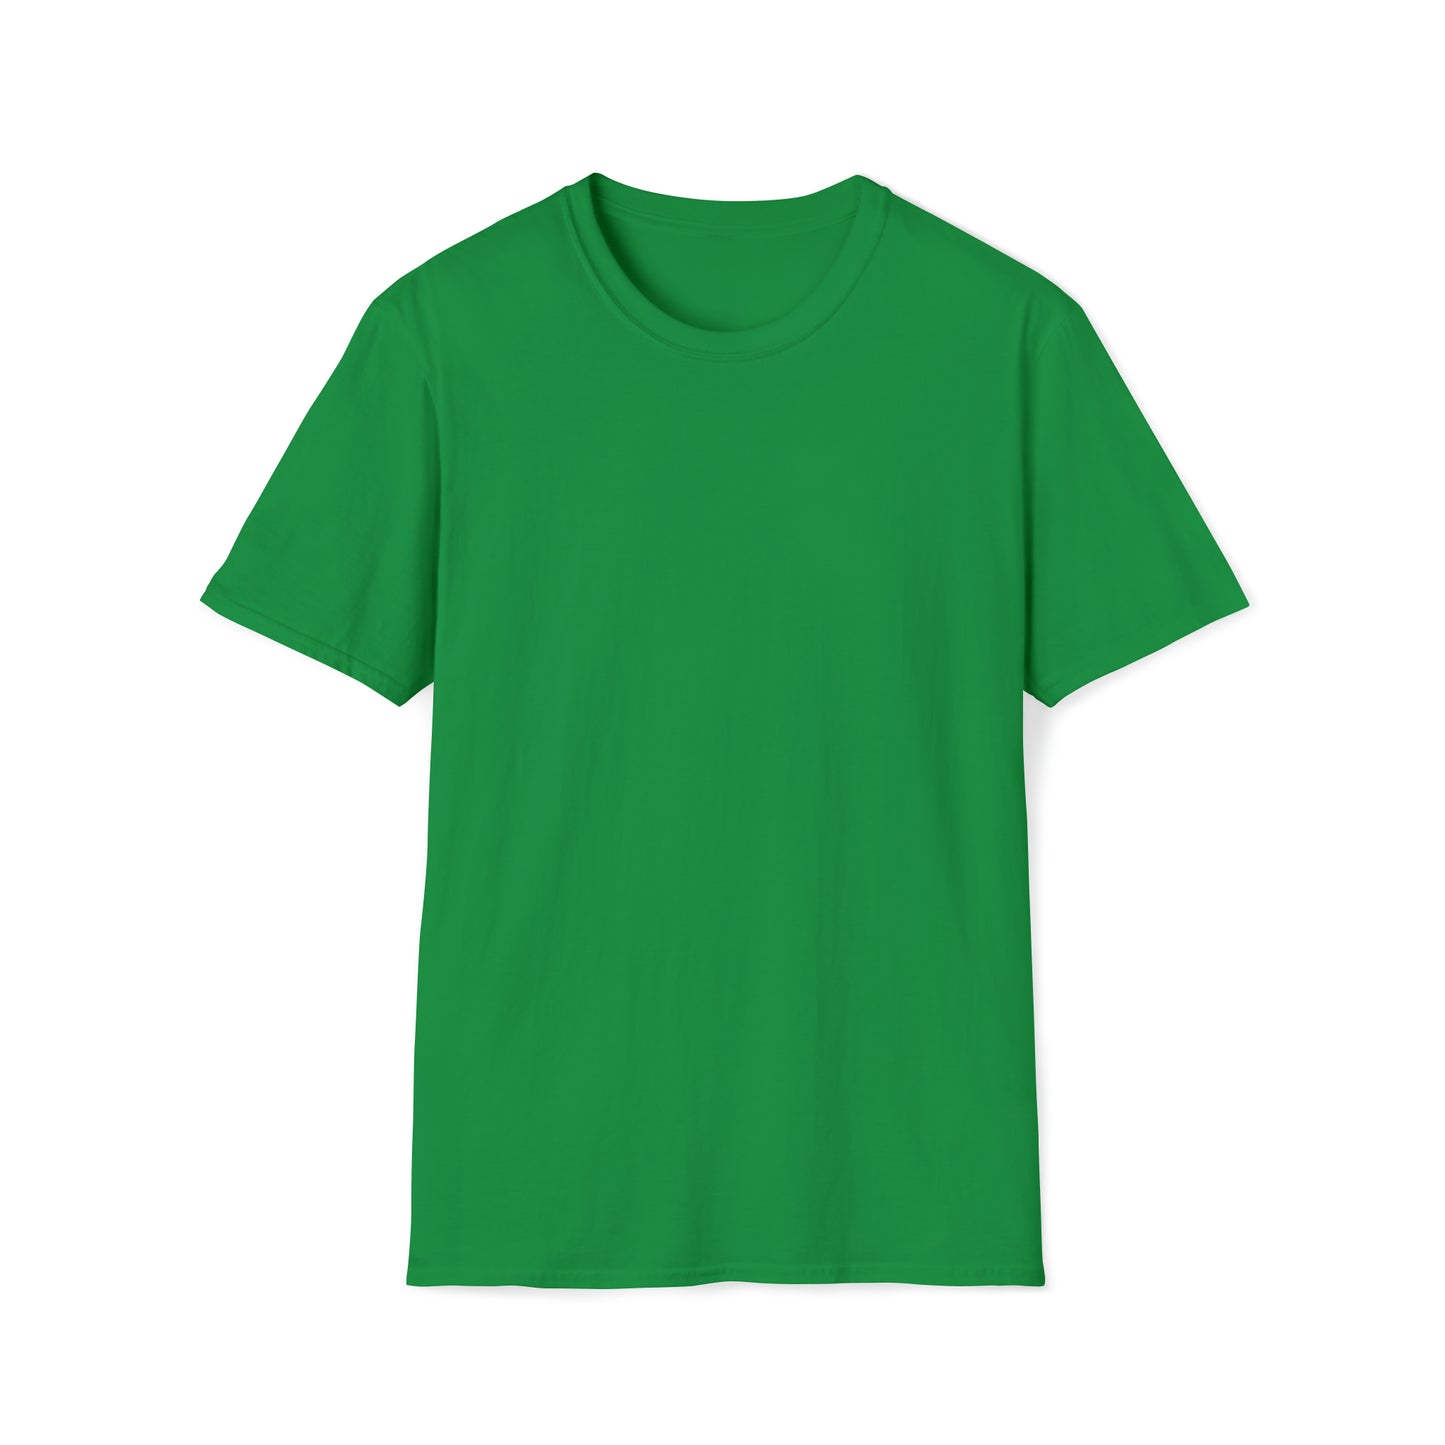 Unisex Softstyle T-Shirt personalized